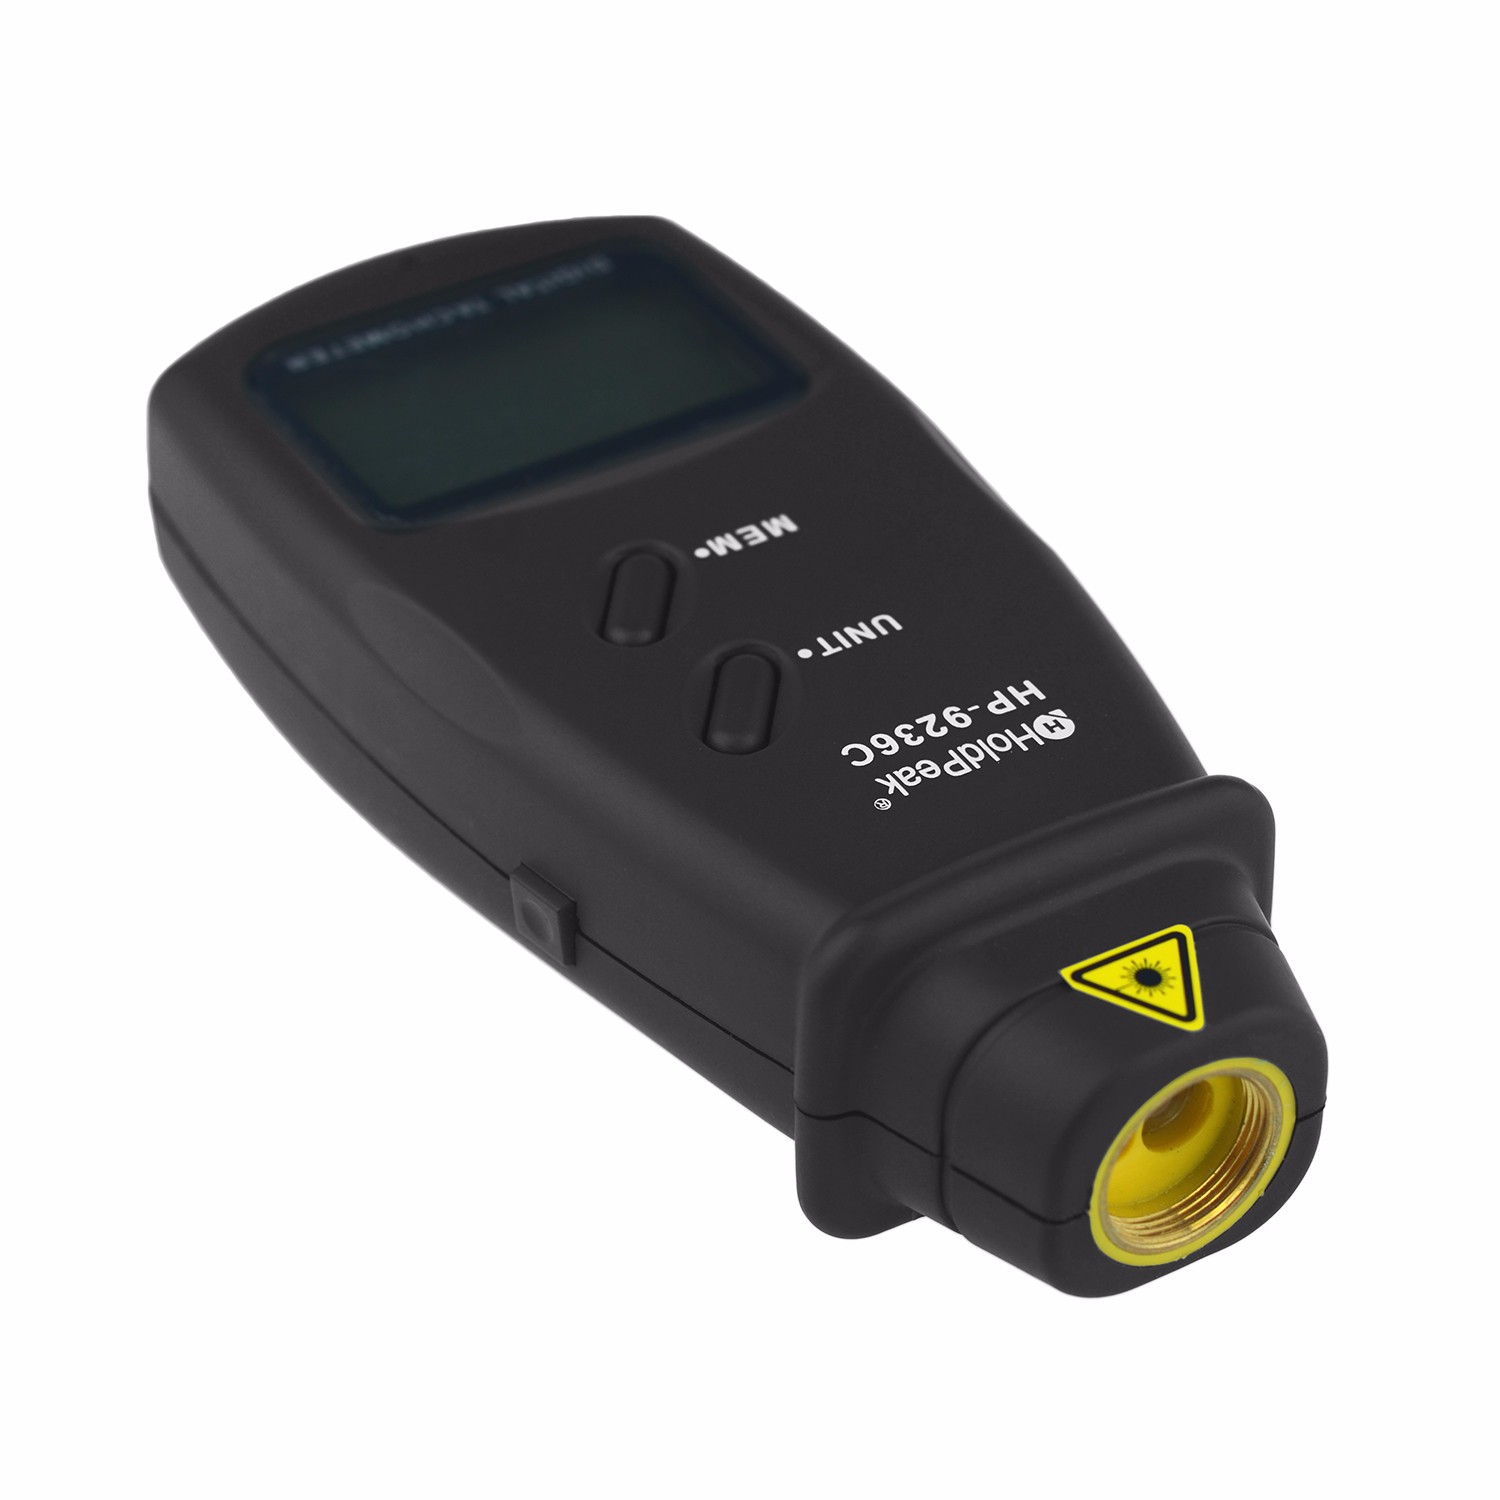 HoldPeak stable digital laser tachometer for business for ships